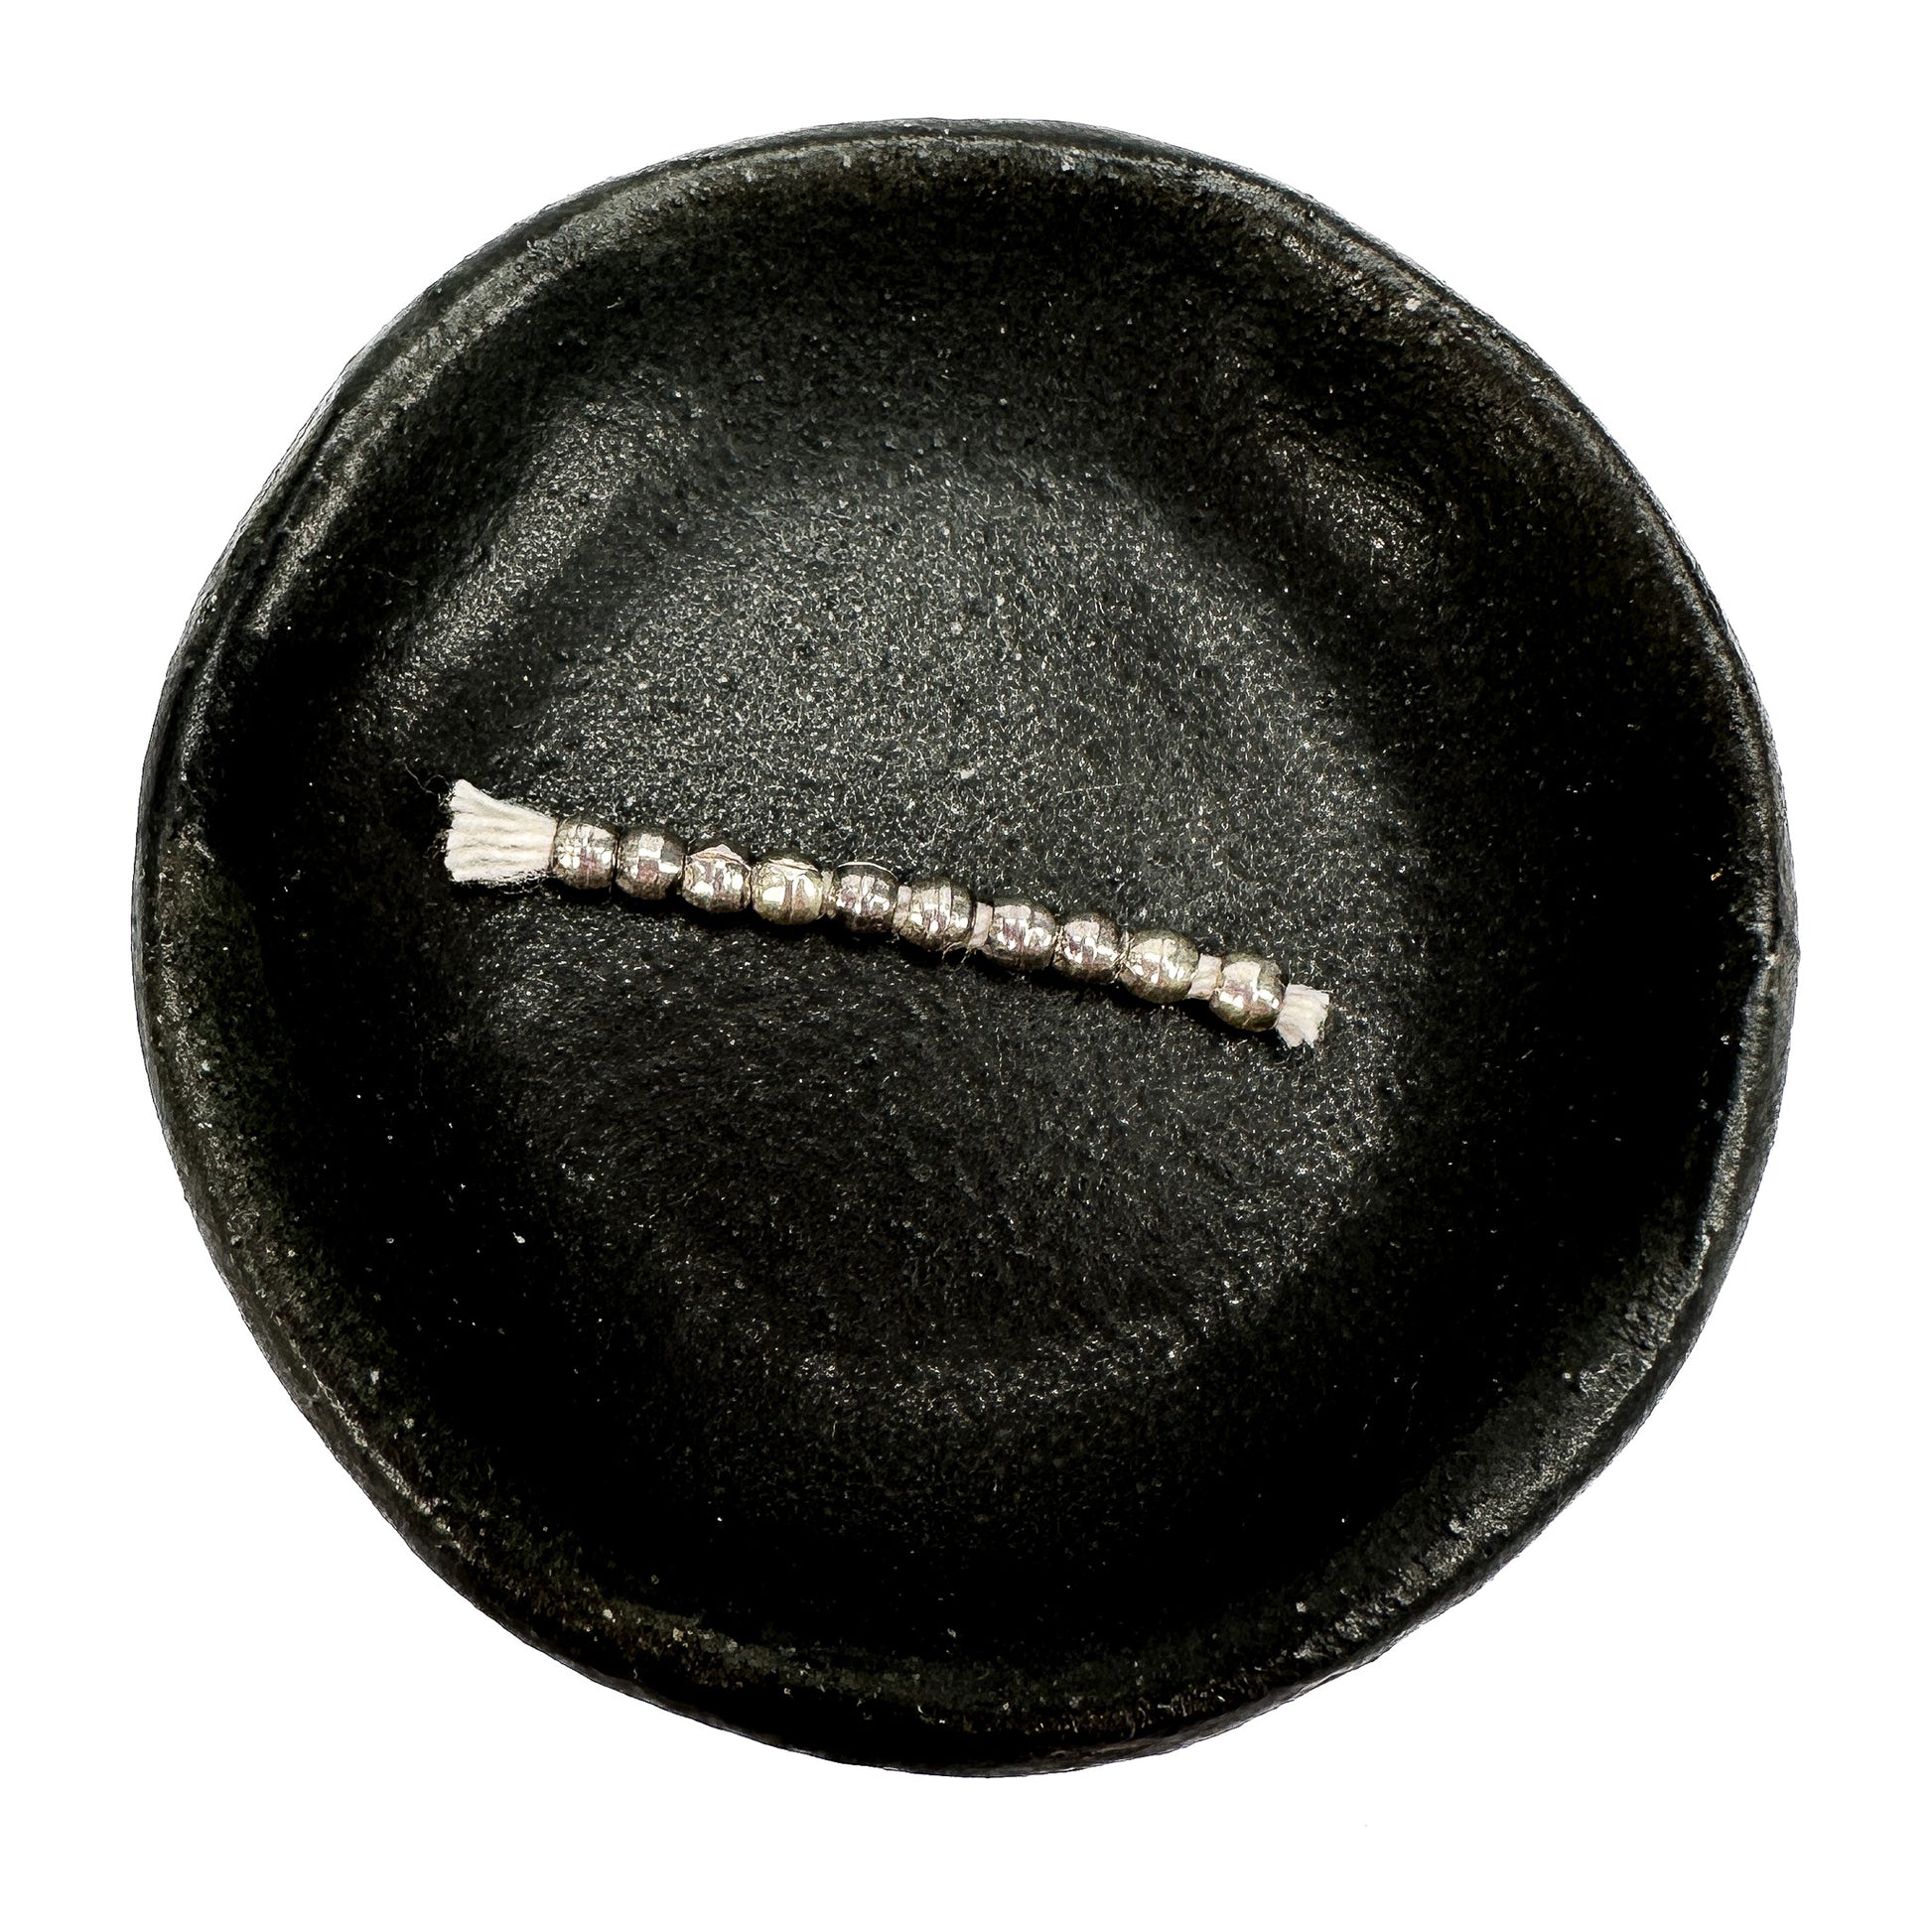 Thai Silver 2.5mm Handmade Bead - 10 pcs.-The Bead Gallery Honolulu